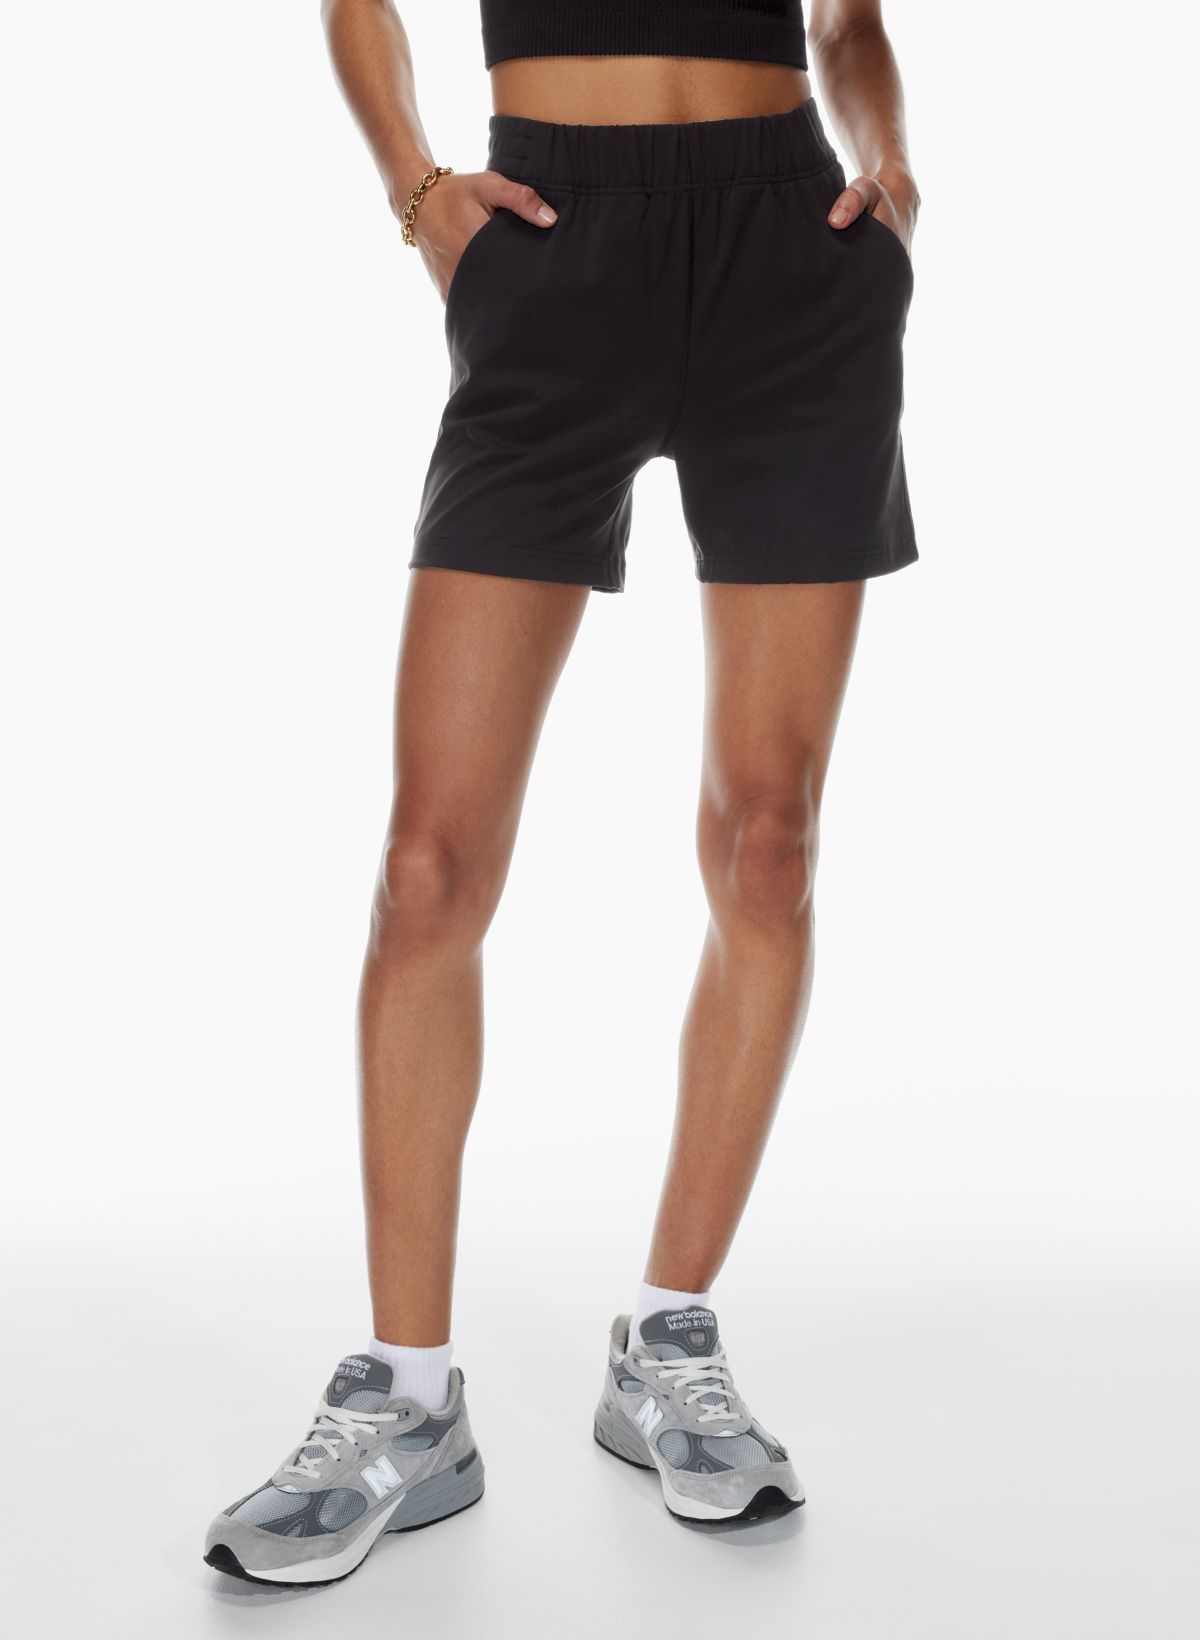 TENJOY Men's Running Shorts Gym Athletic Workout Shorts for Men 3 inch  Sports Shorts with Zipper Pocket Black Medium